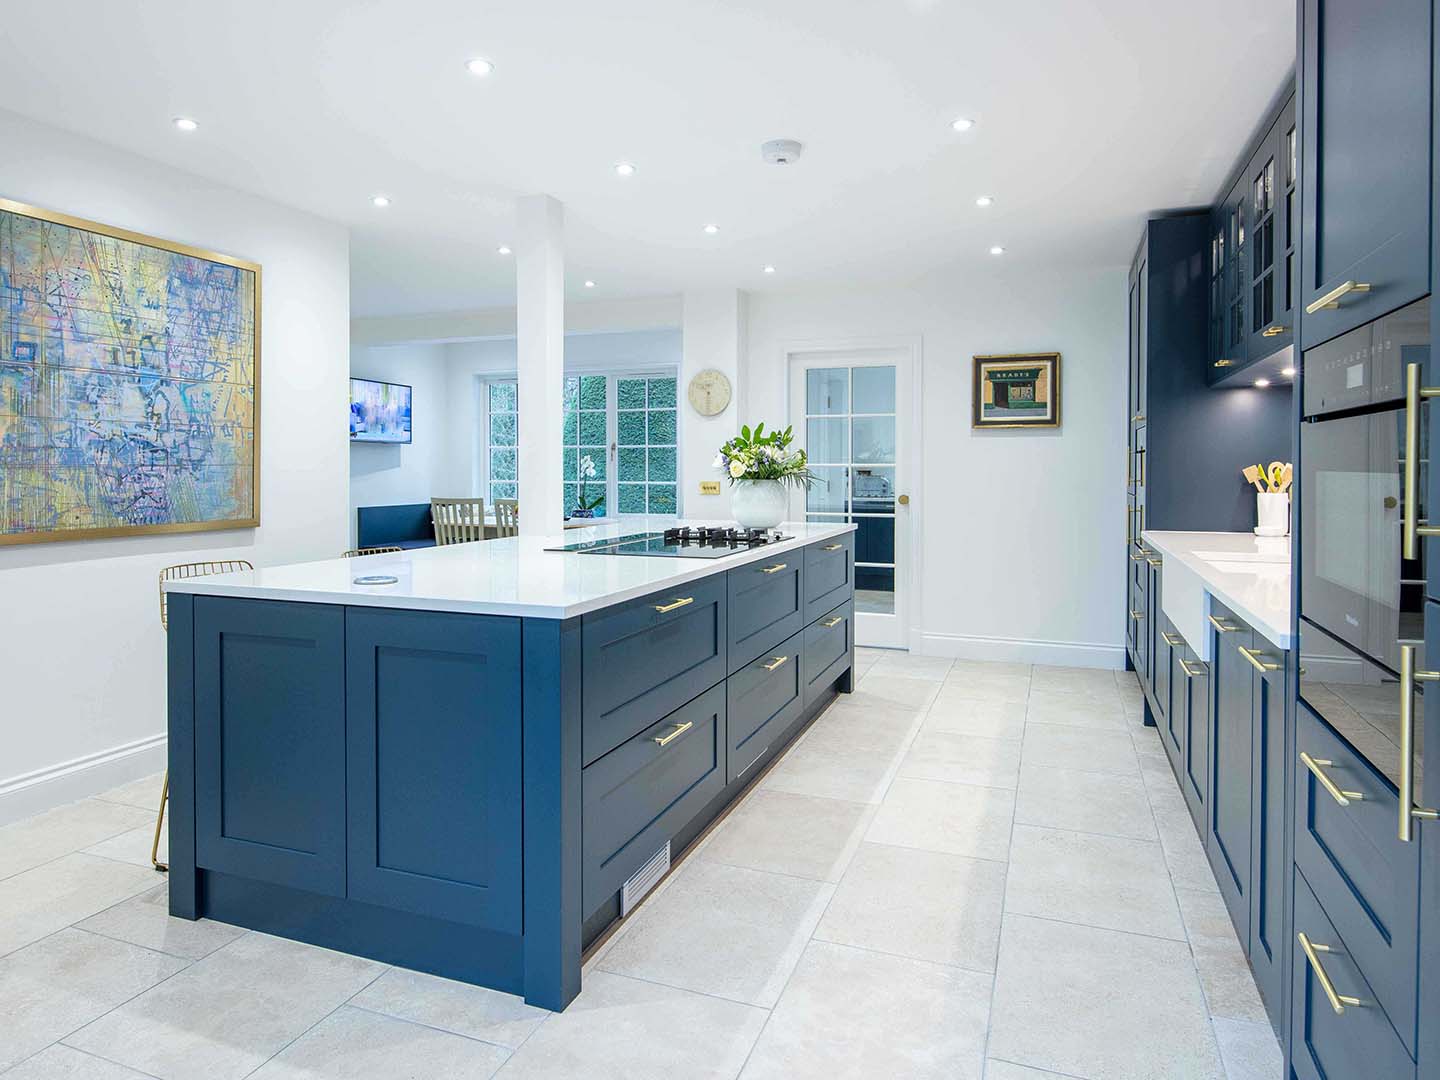 Blue Callerton kitchen cupboards paired with white marble worktop, showcasing kitchen island